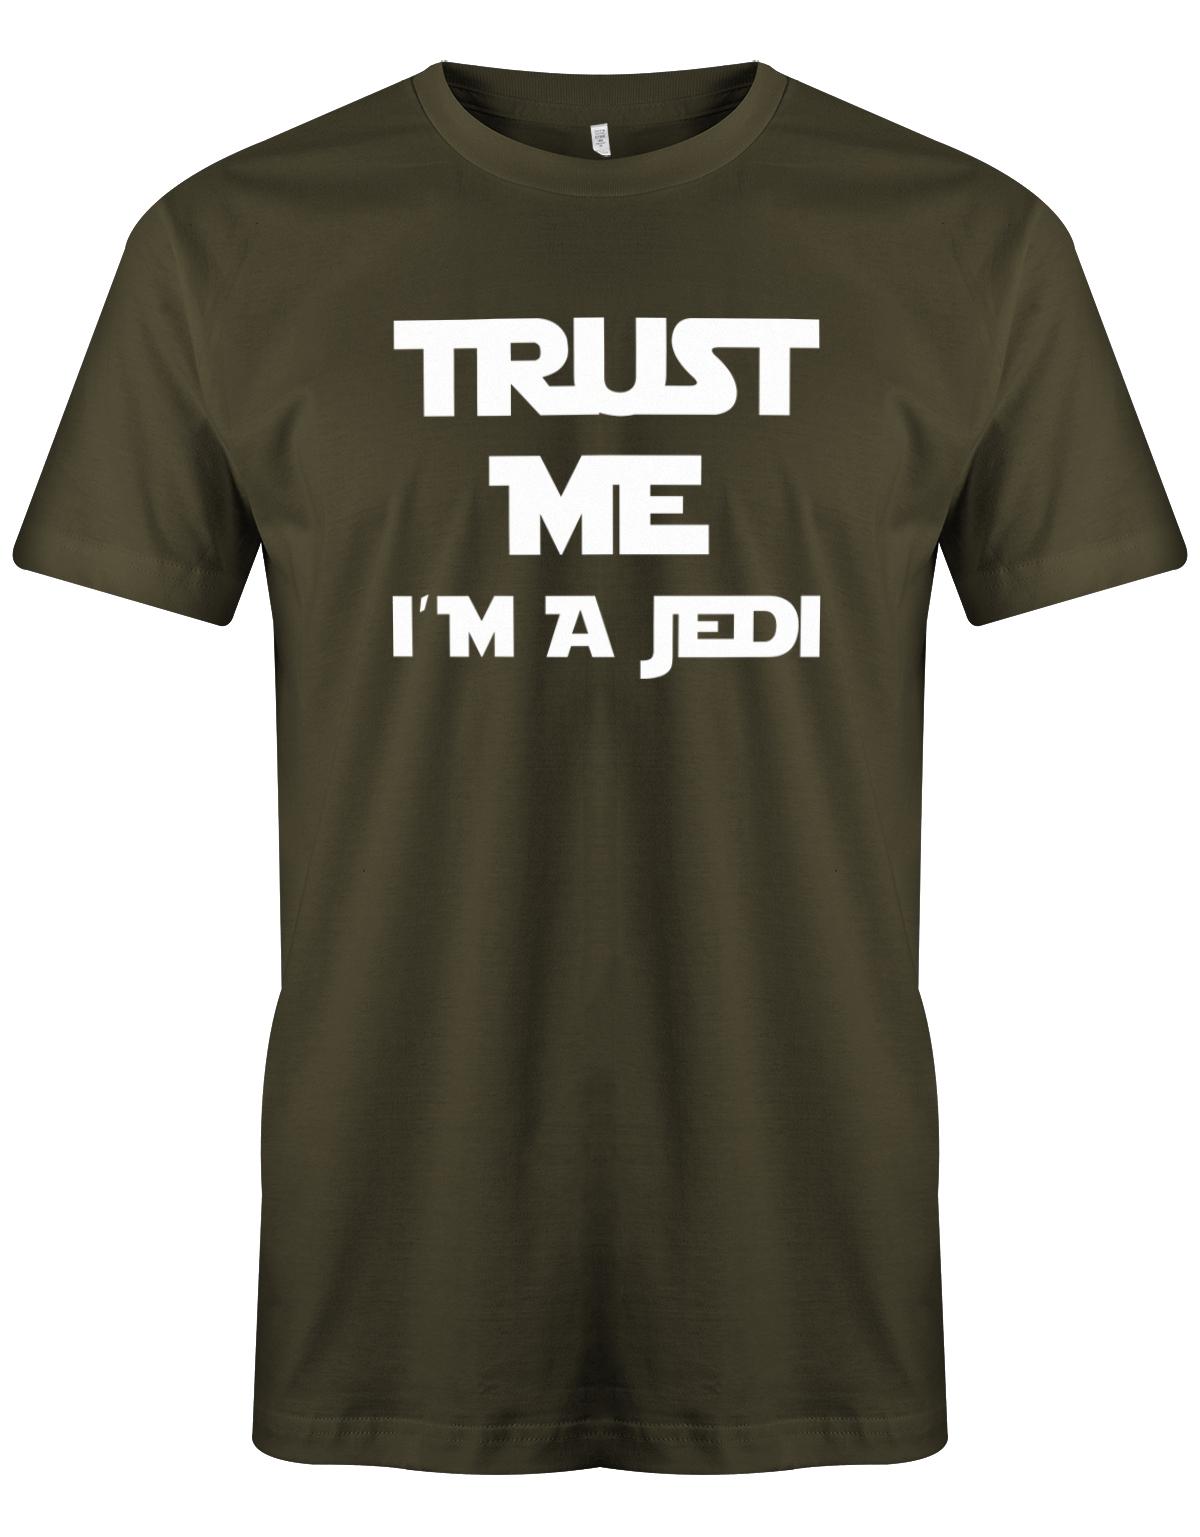 Trust-me-i-m-a-jedi-Herren-Shirt-army